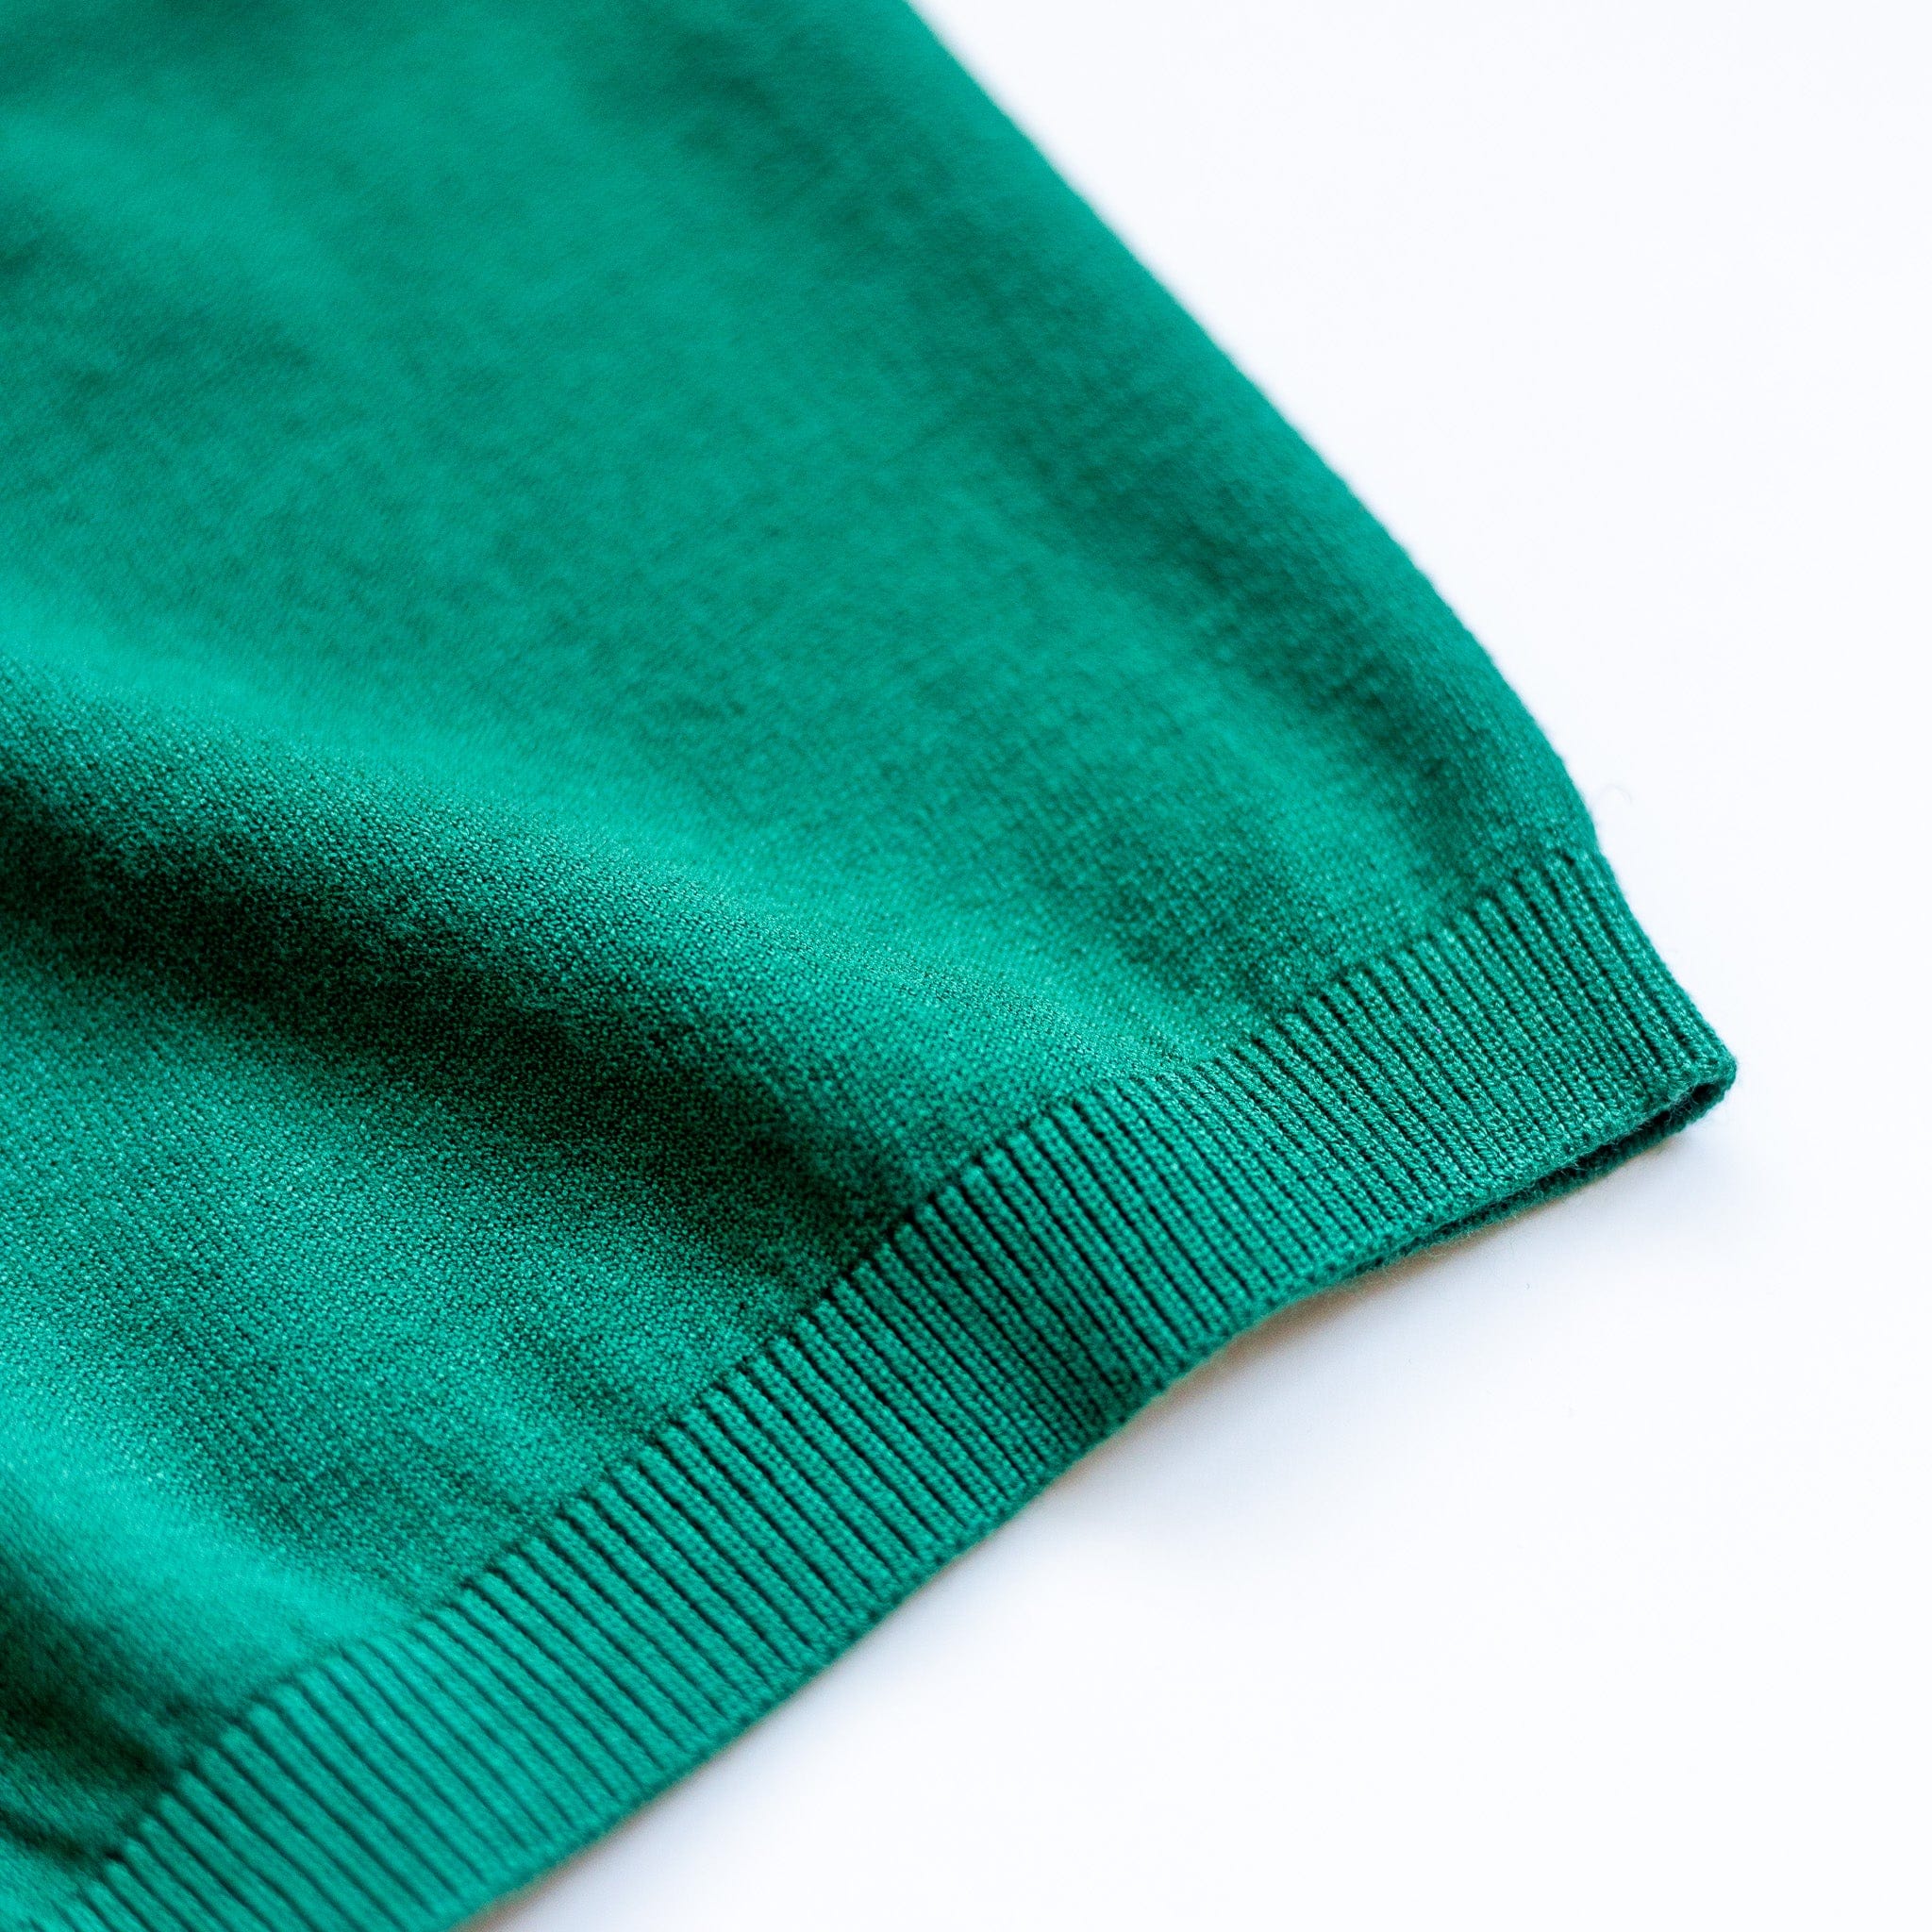 GTSC Knit Polo Shirts Canada-Golf-Lifestyle-Clothing-Brand